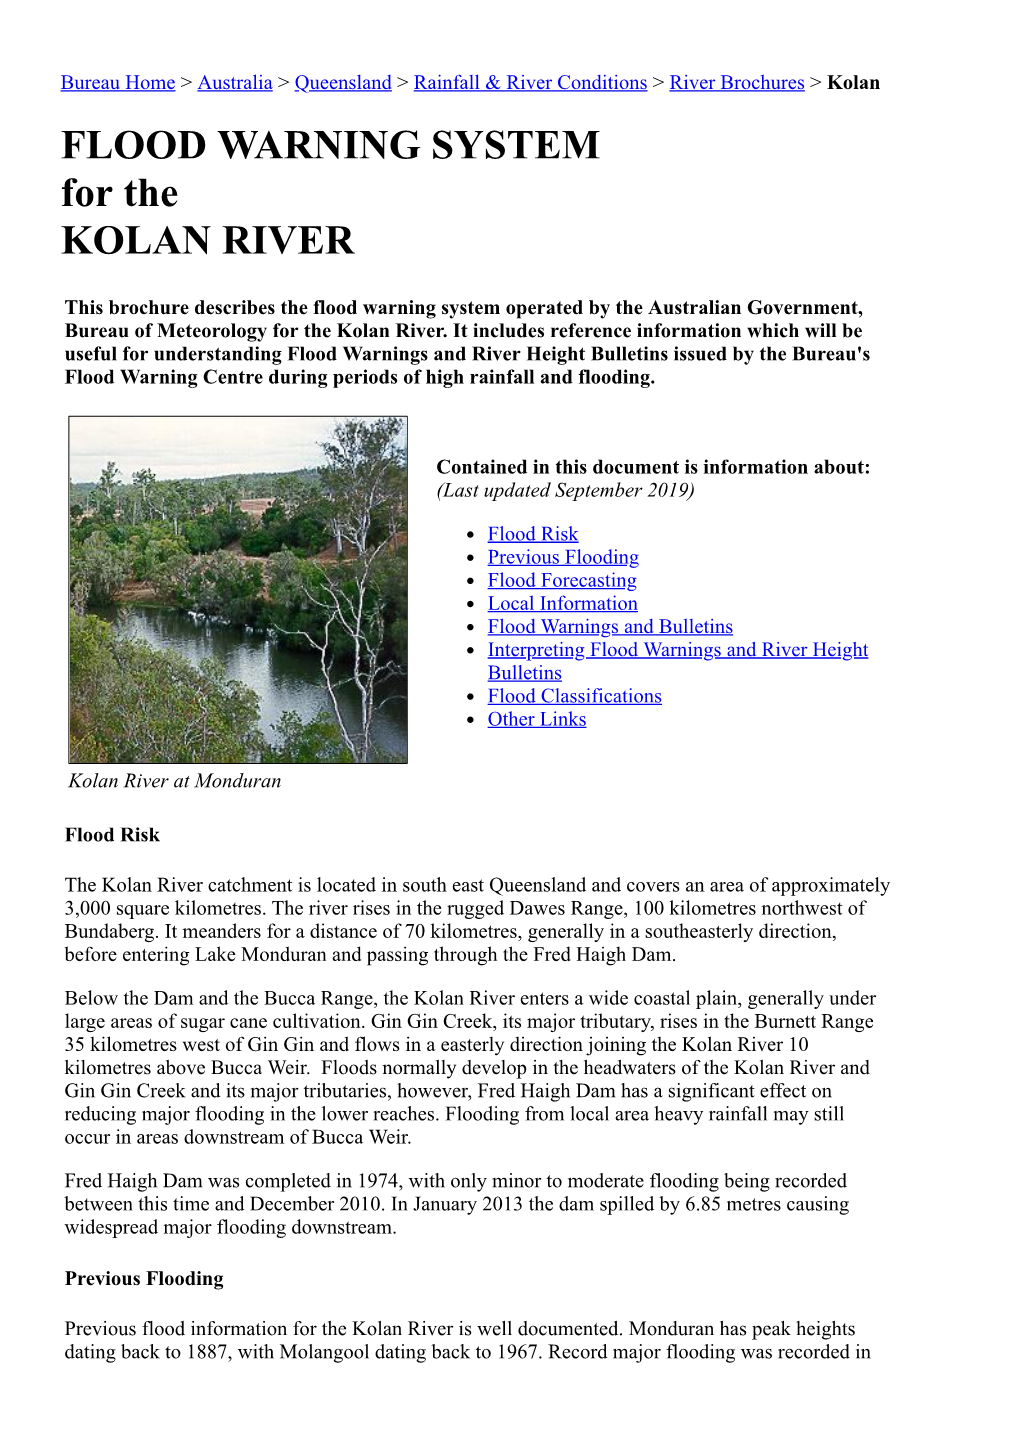 FLOOD WARNING SYSTEM for the KOLAN RIVER